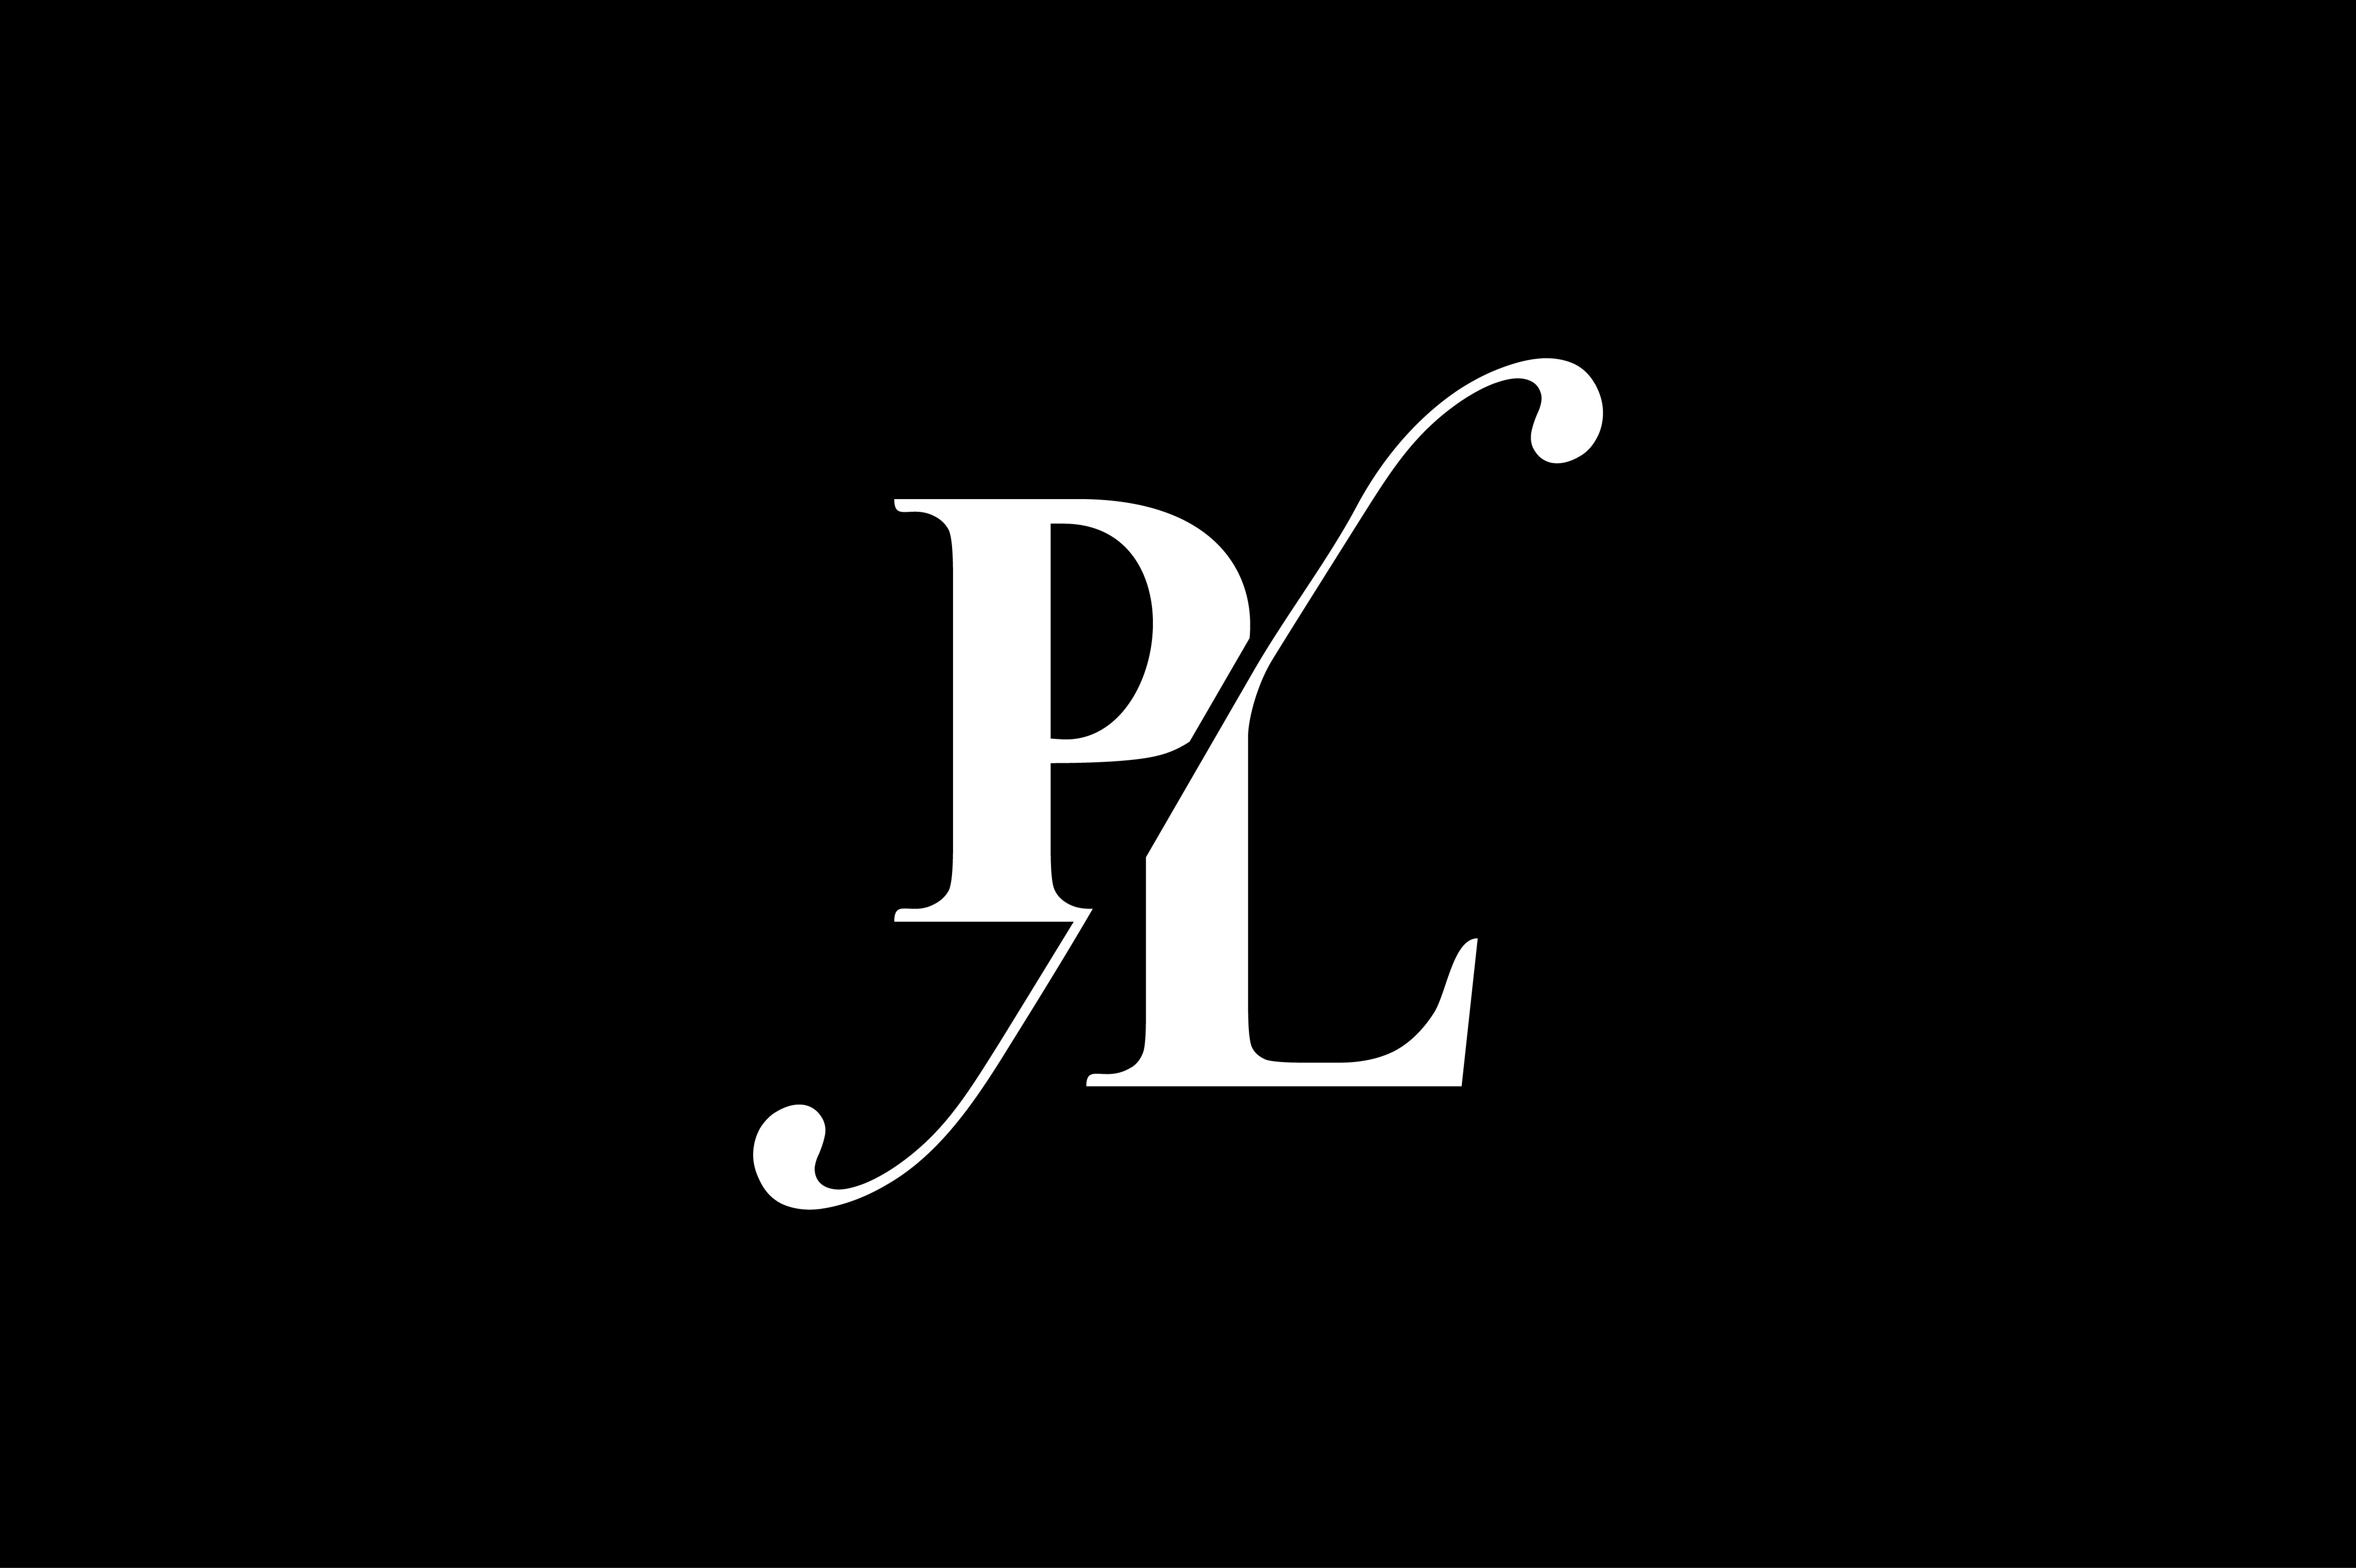 pl-monogram-logo-design-by-vectorseller-thehungryjpeg